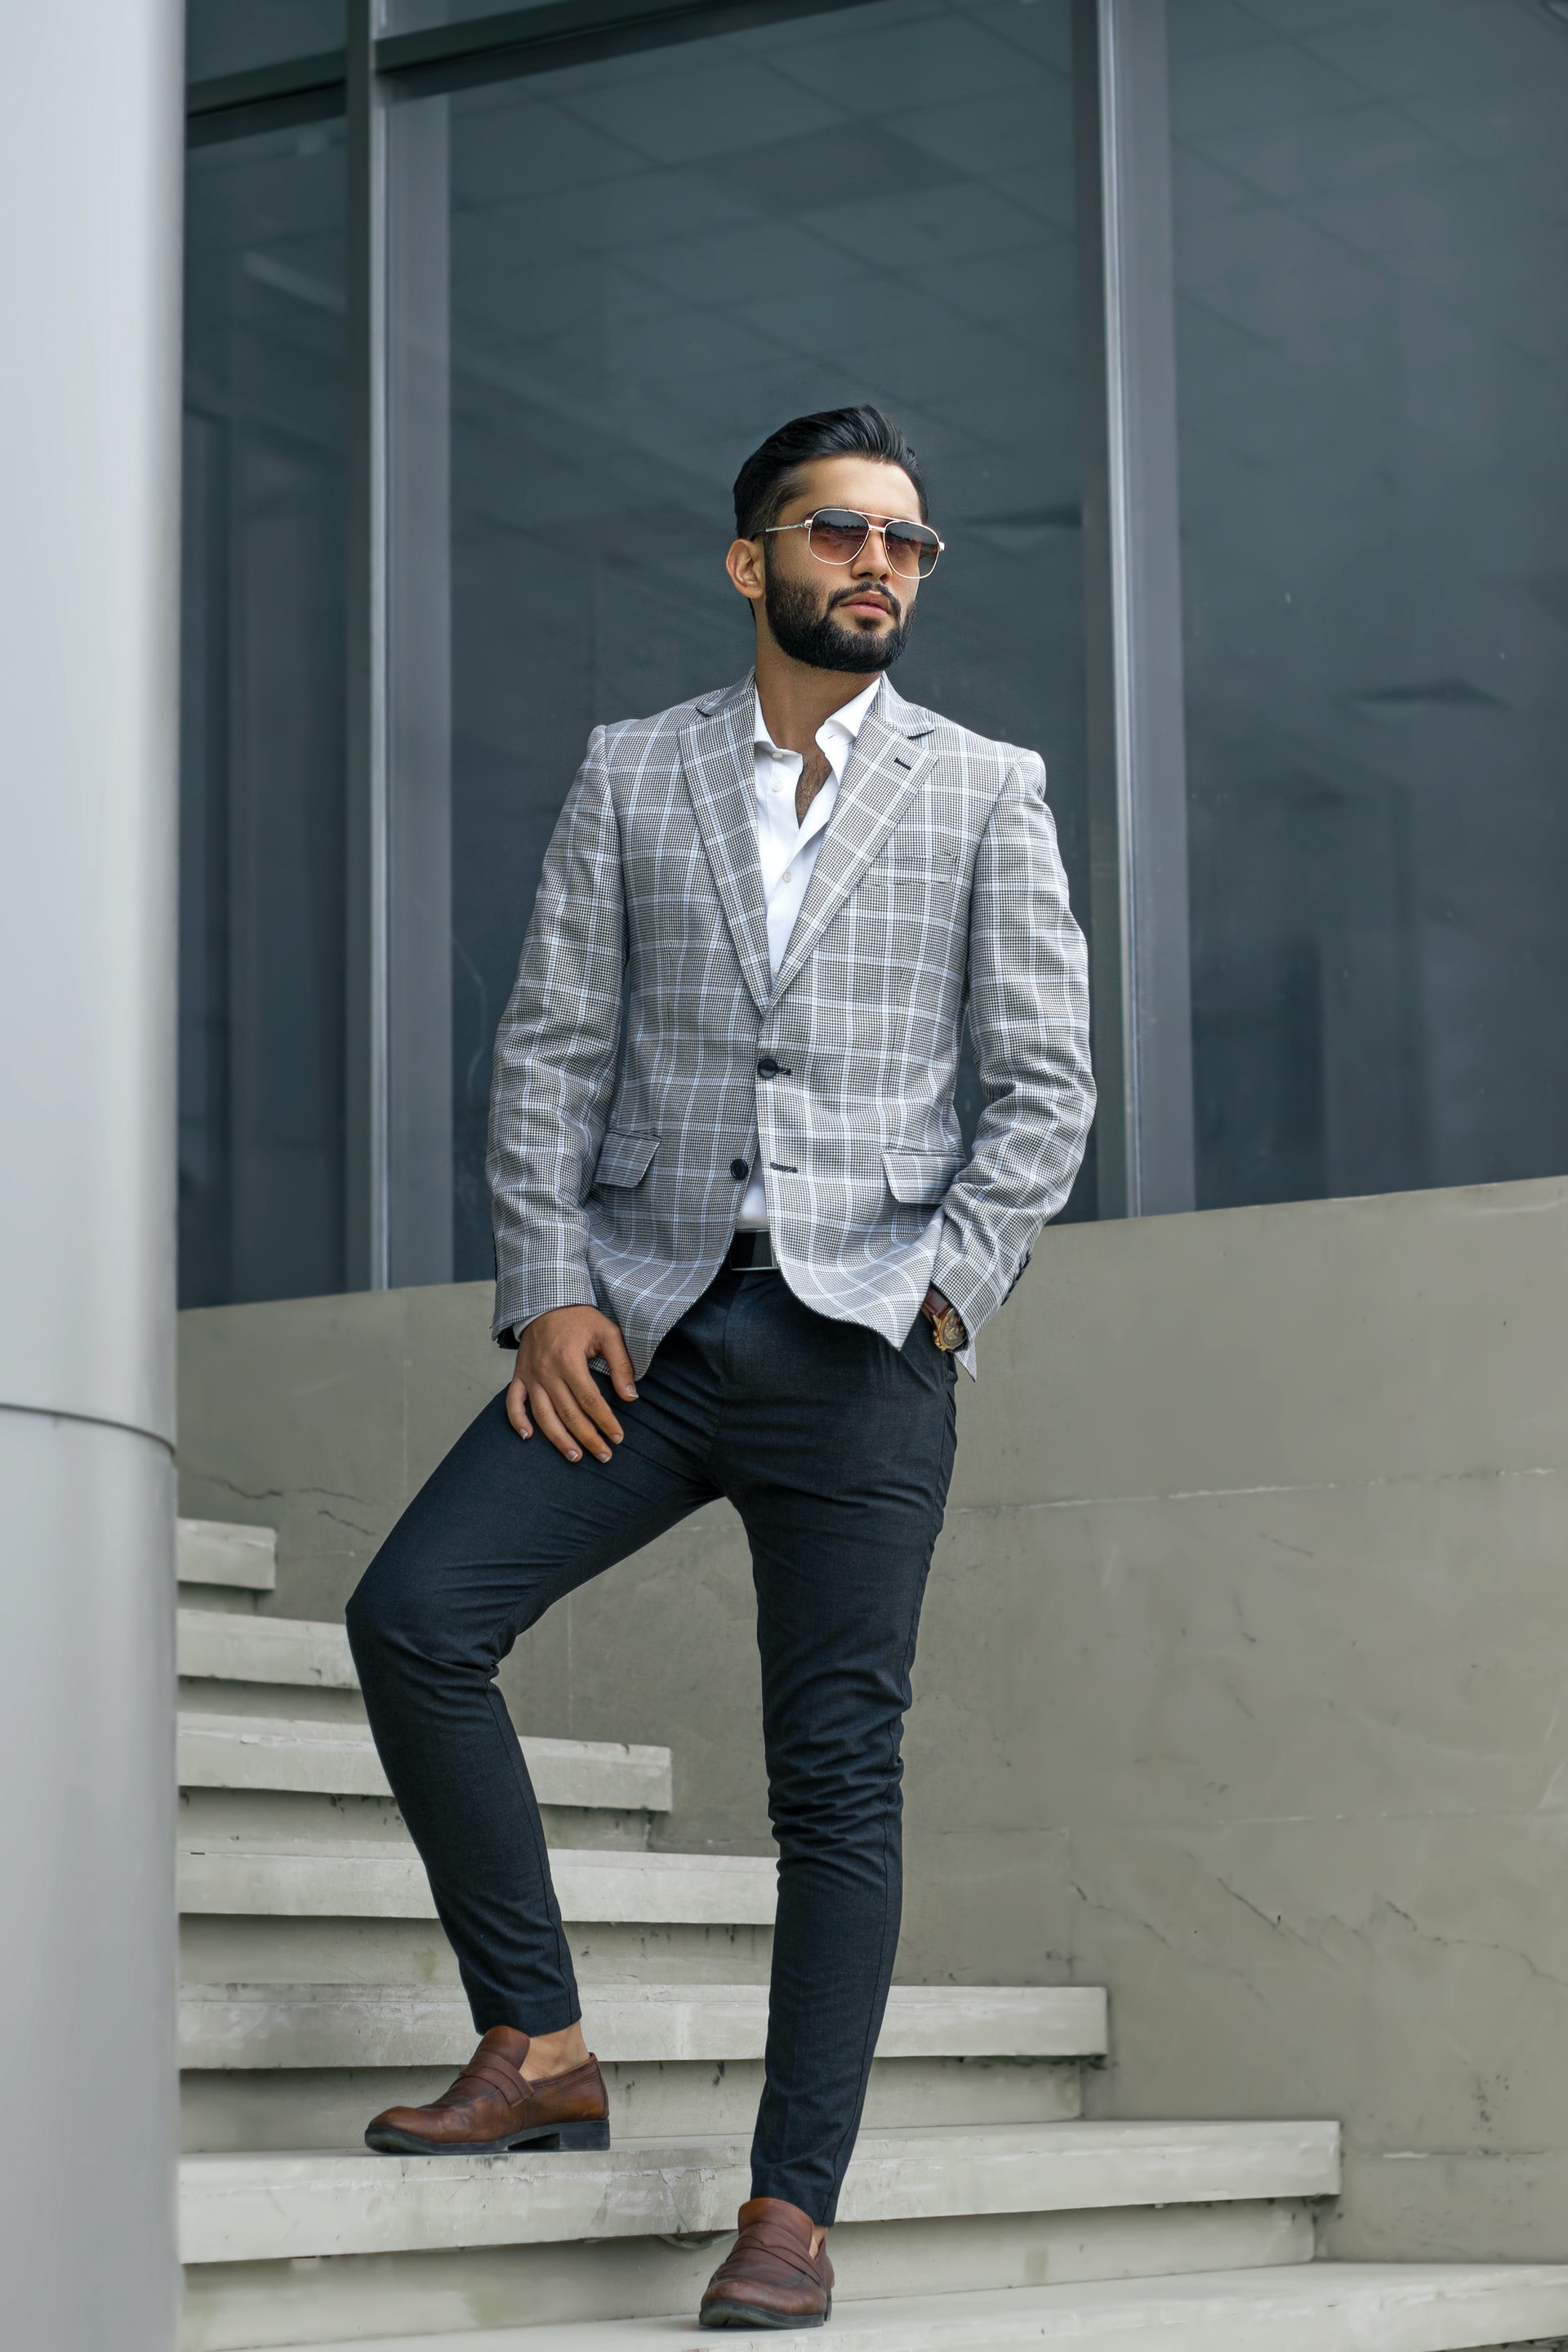 Blazers, tips and fashion essential for professional men. Ph. Mahdi Bafande, Unsplash